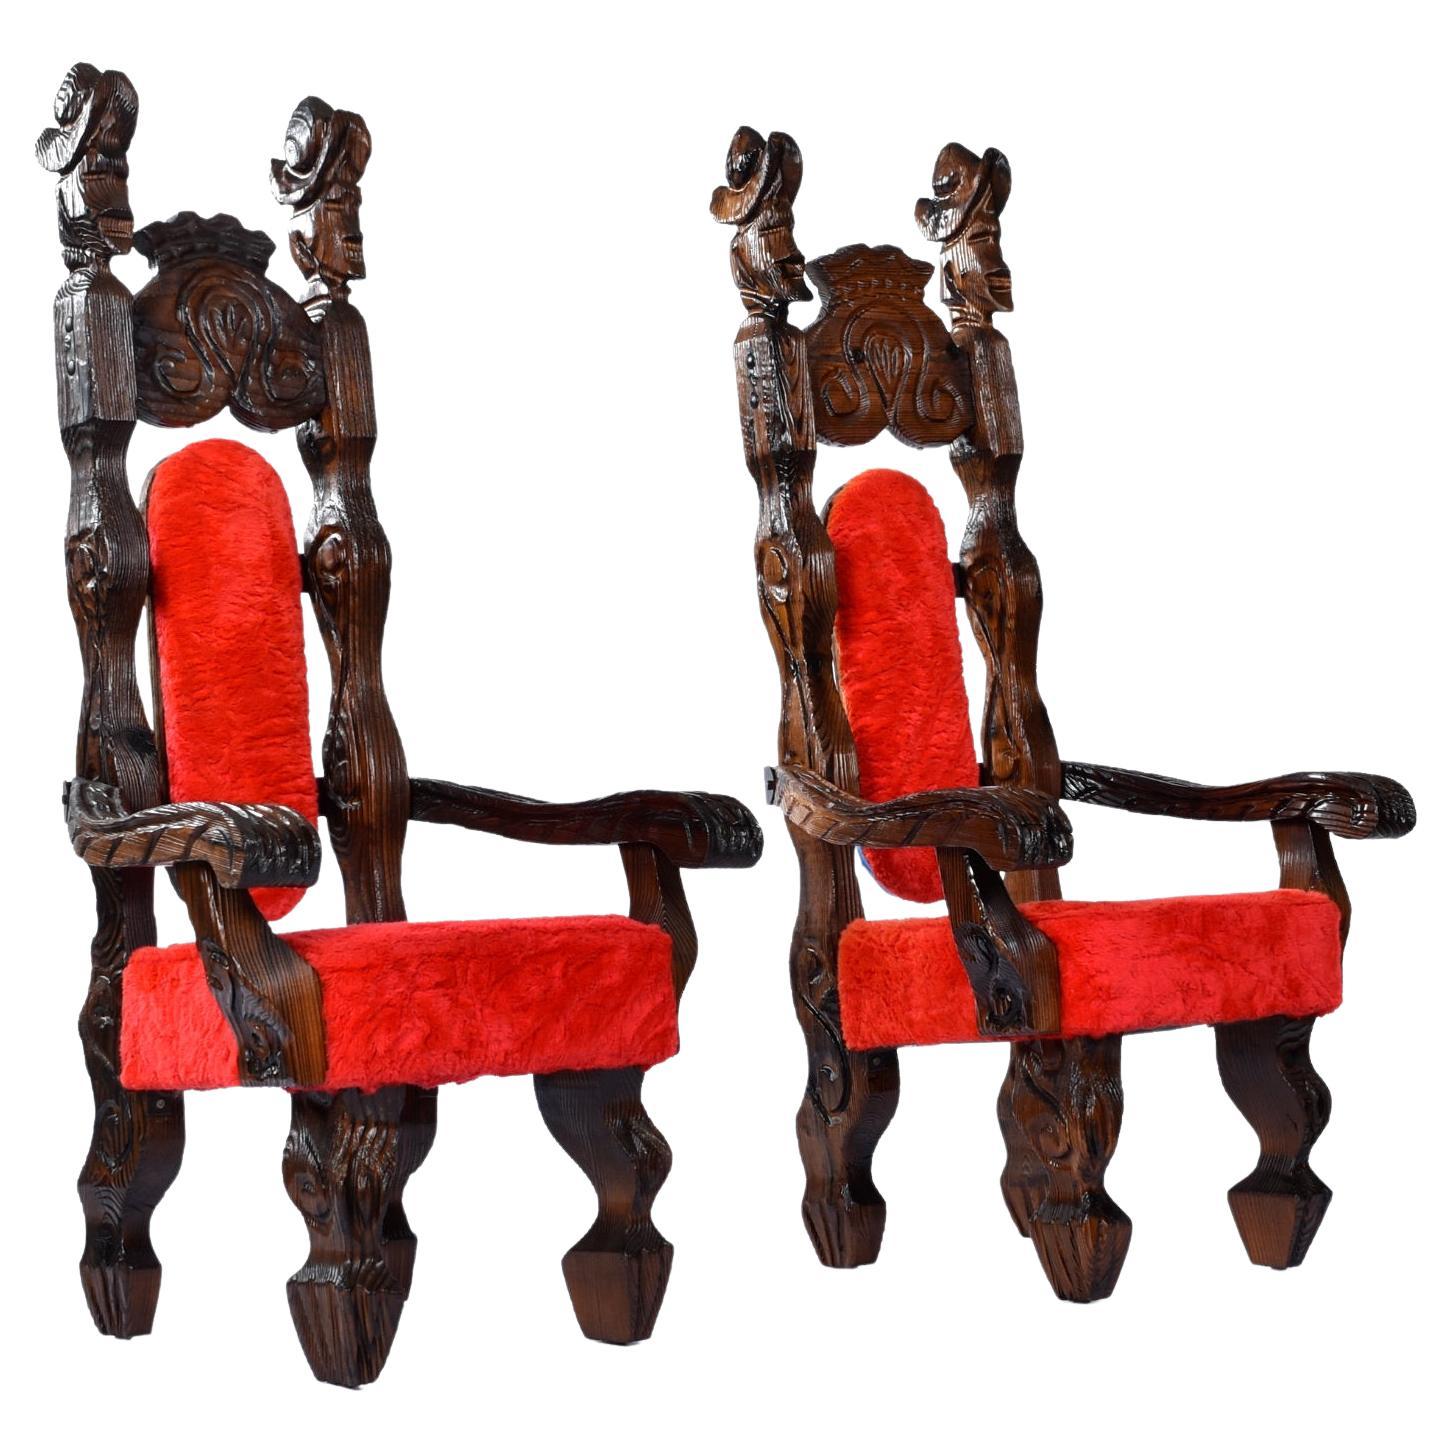 '2' Restored Vintage Witco Conquistador Tiki Throne Chairs in Original Red Fur